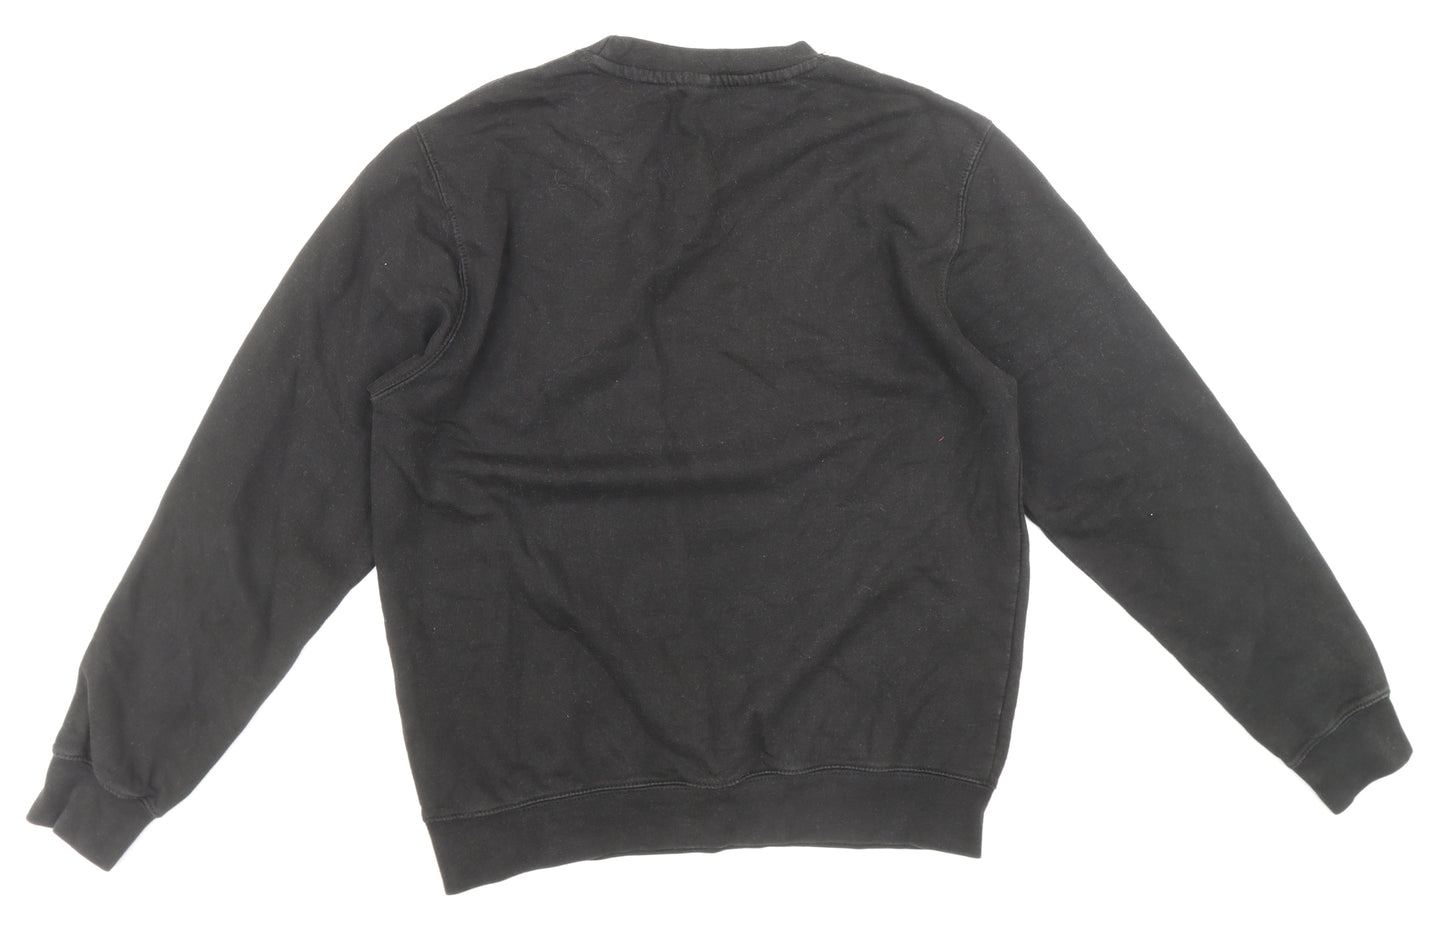 Awdis Mens Black Cotton Pullover Sweatshirt Size M - Pulp Fiction